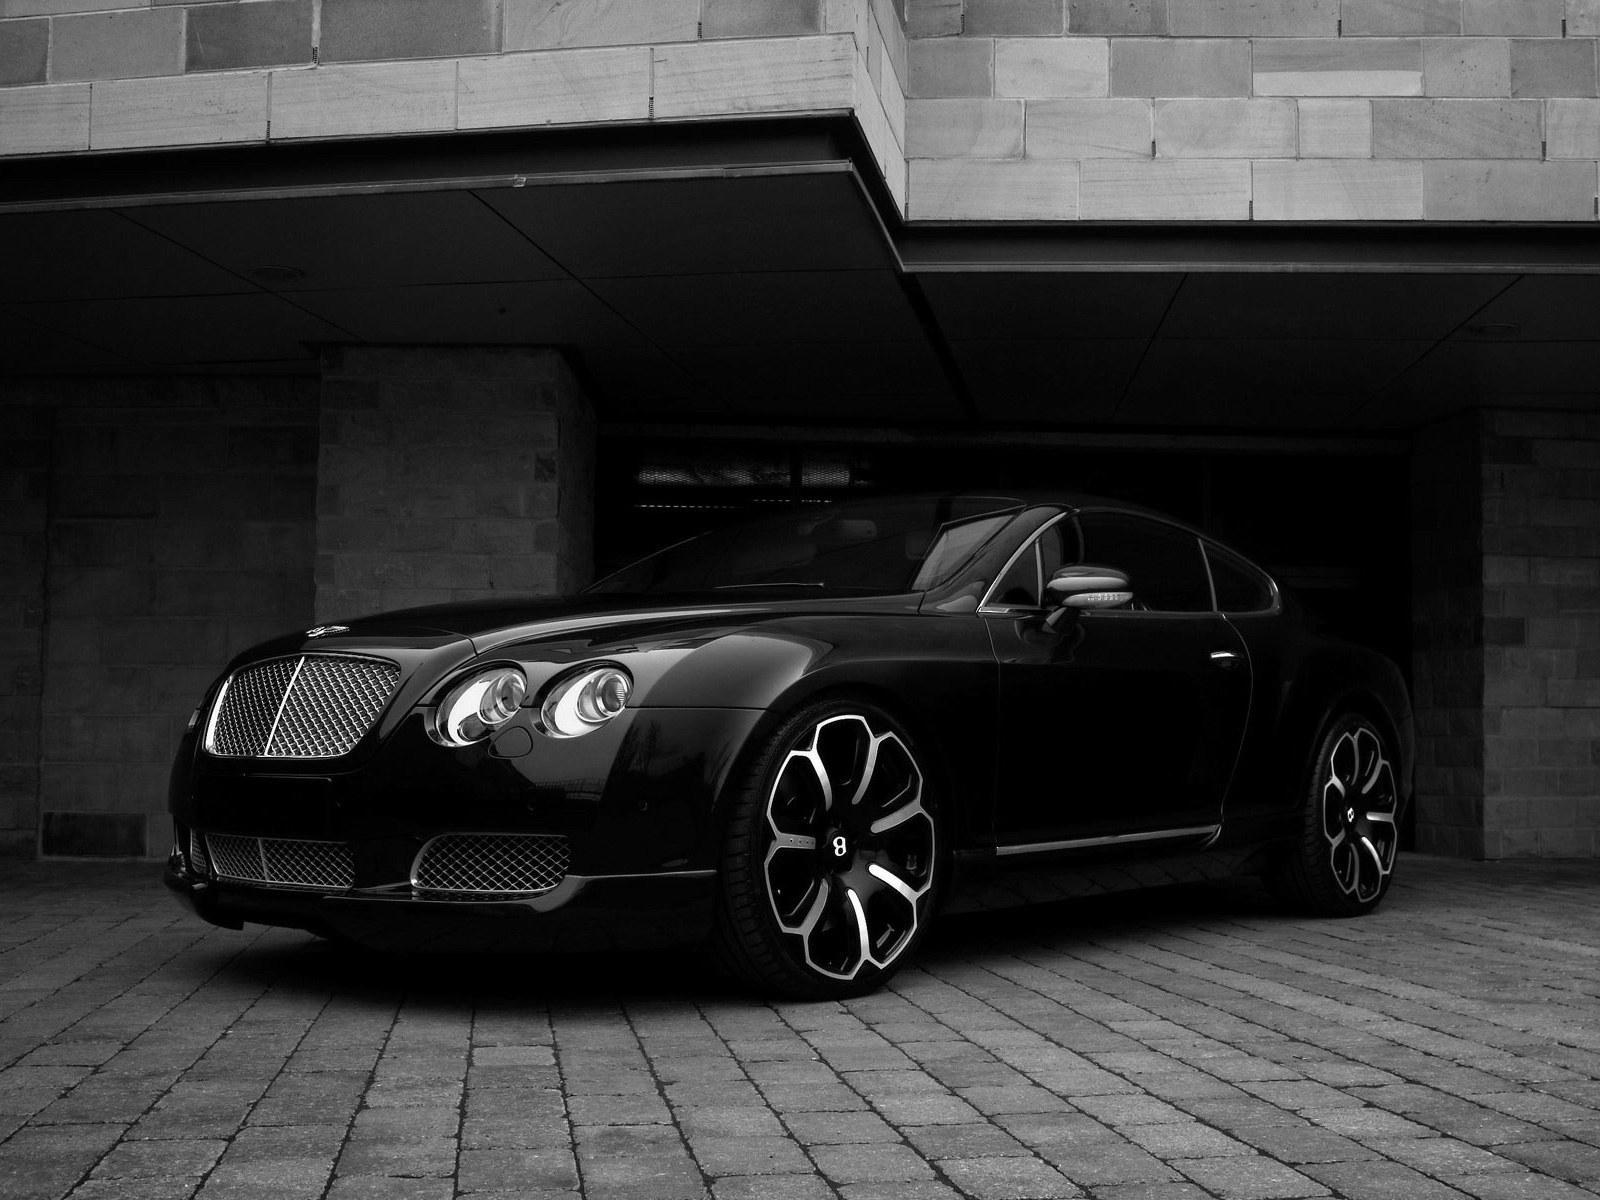 Black Bentley Continental Wallpaper 44040 1600x1200 px